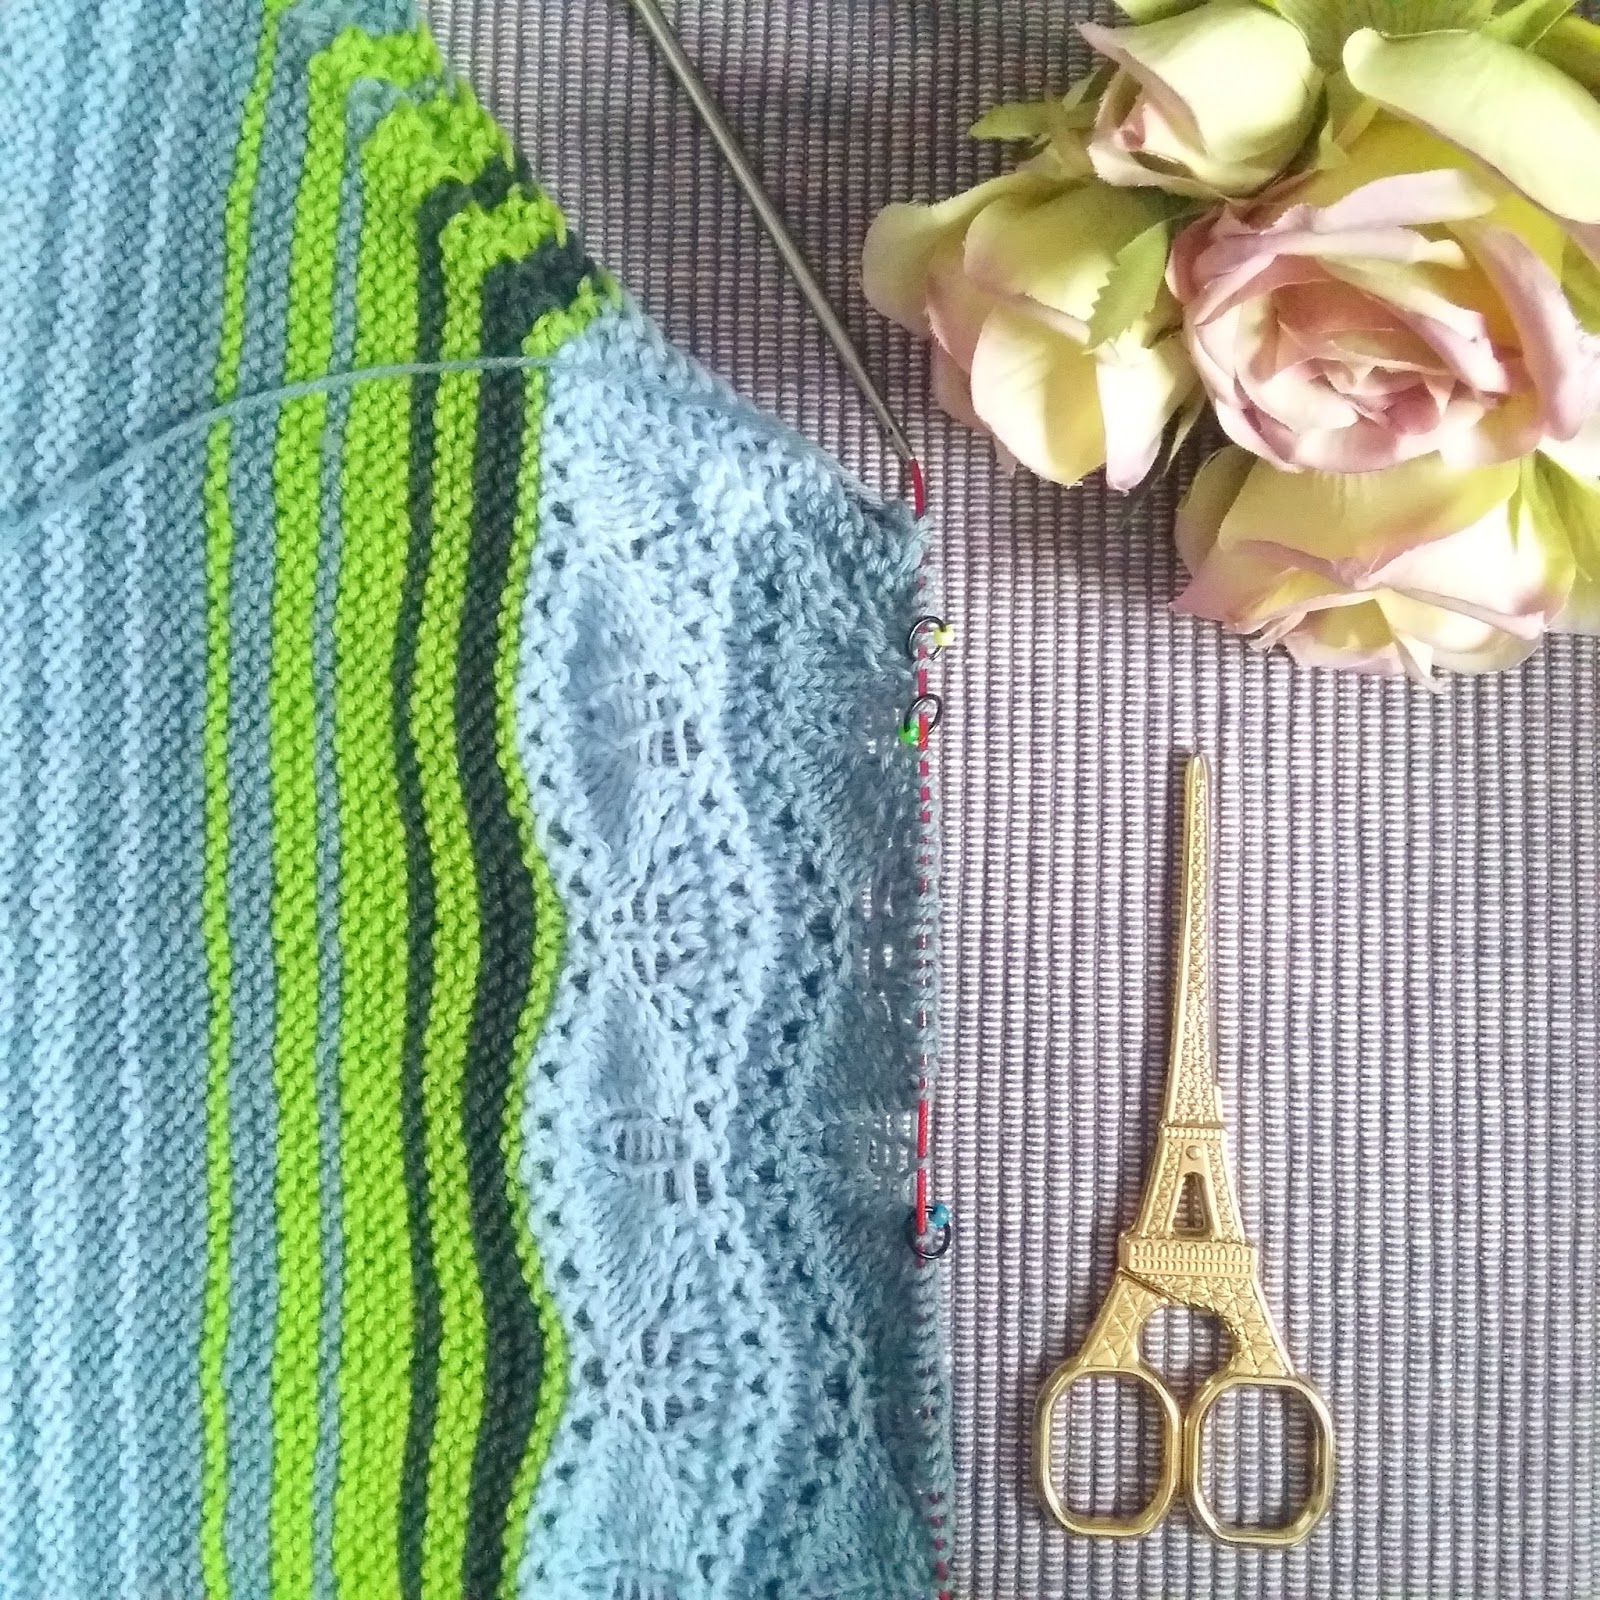 Confessions of a YarnAddict: Monogamous knitting?